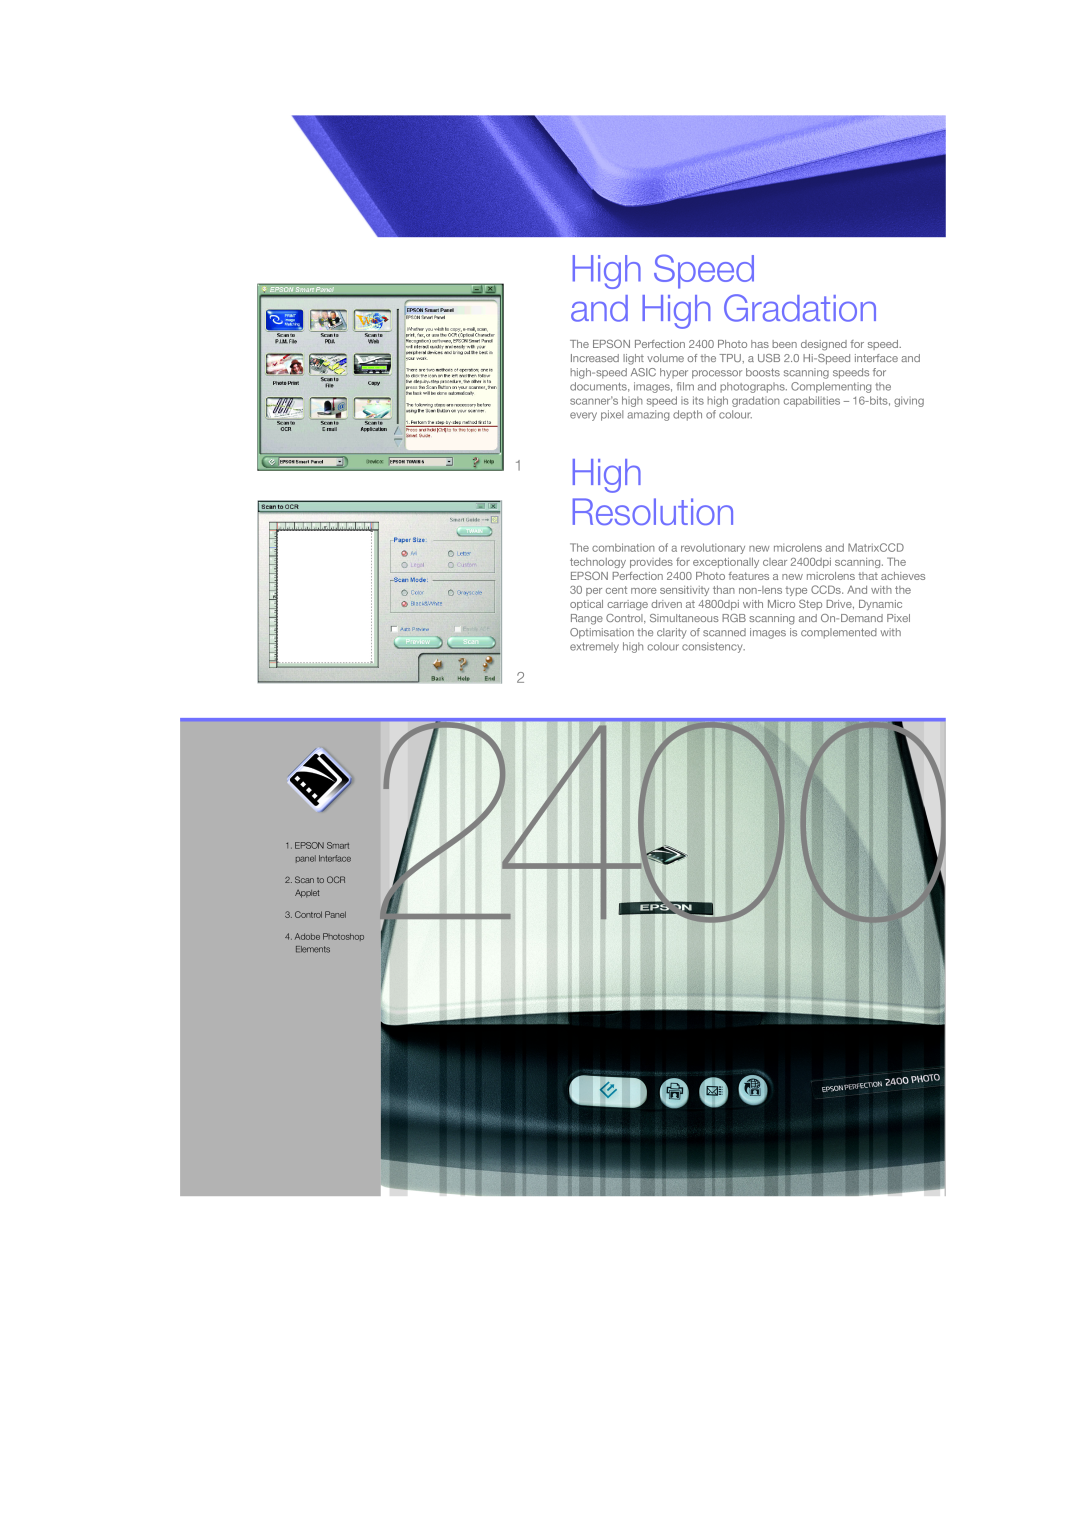 Epson 2400 Photo manual High Speed and High Gradation, High Resolution 